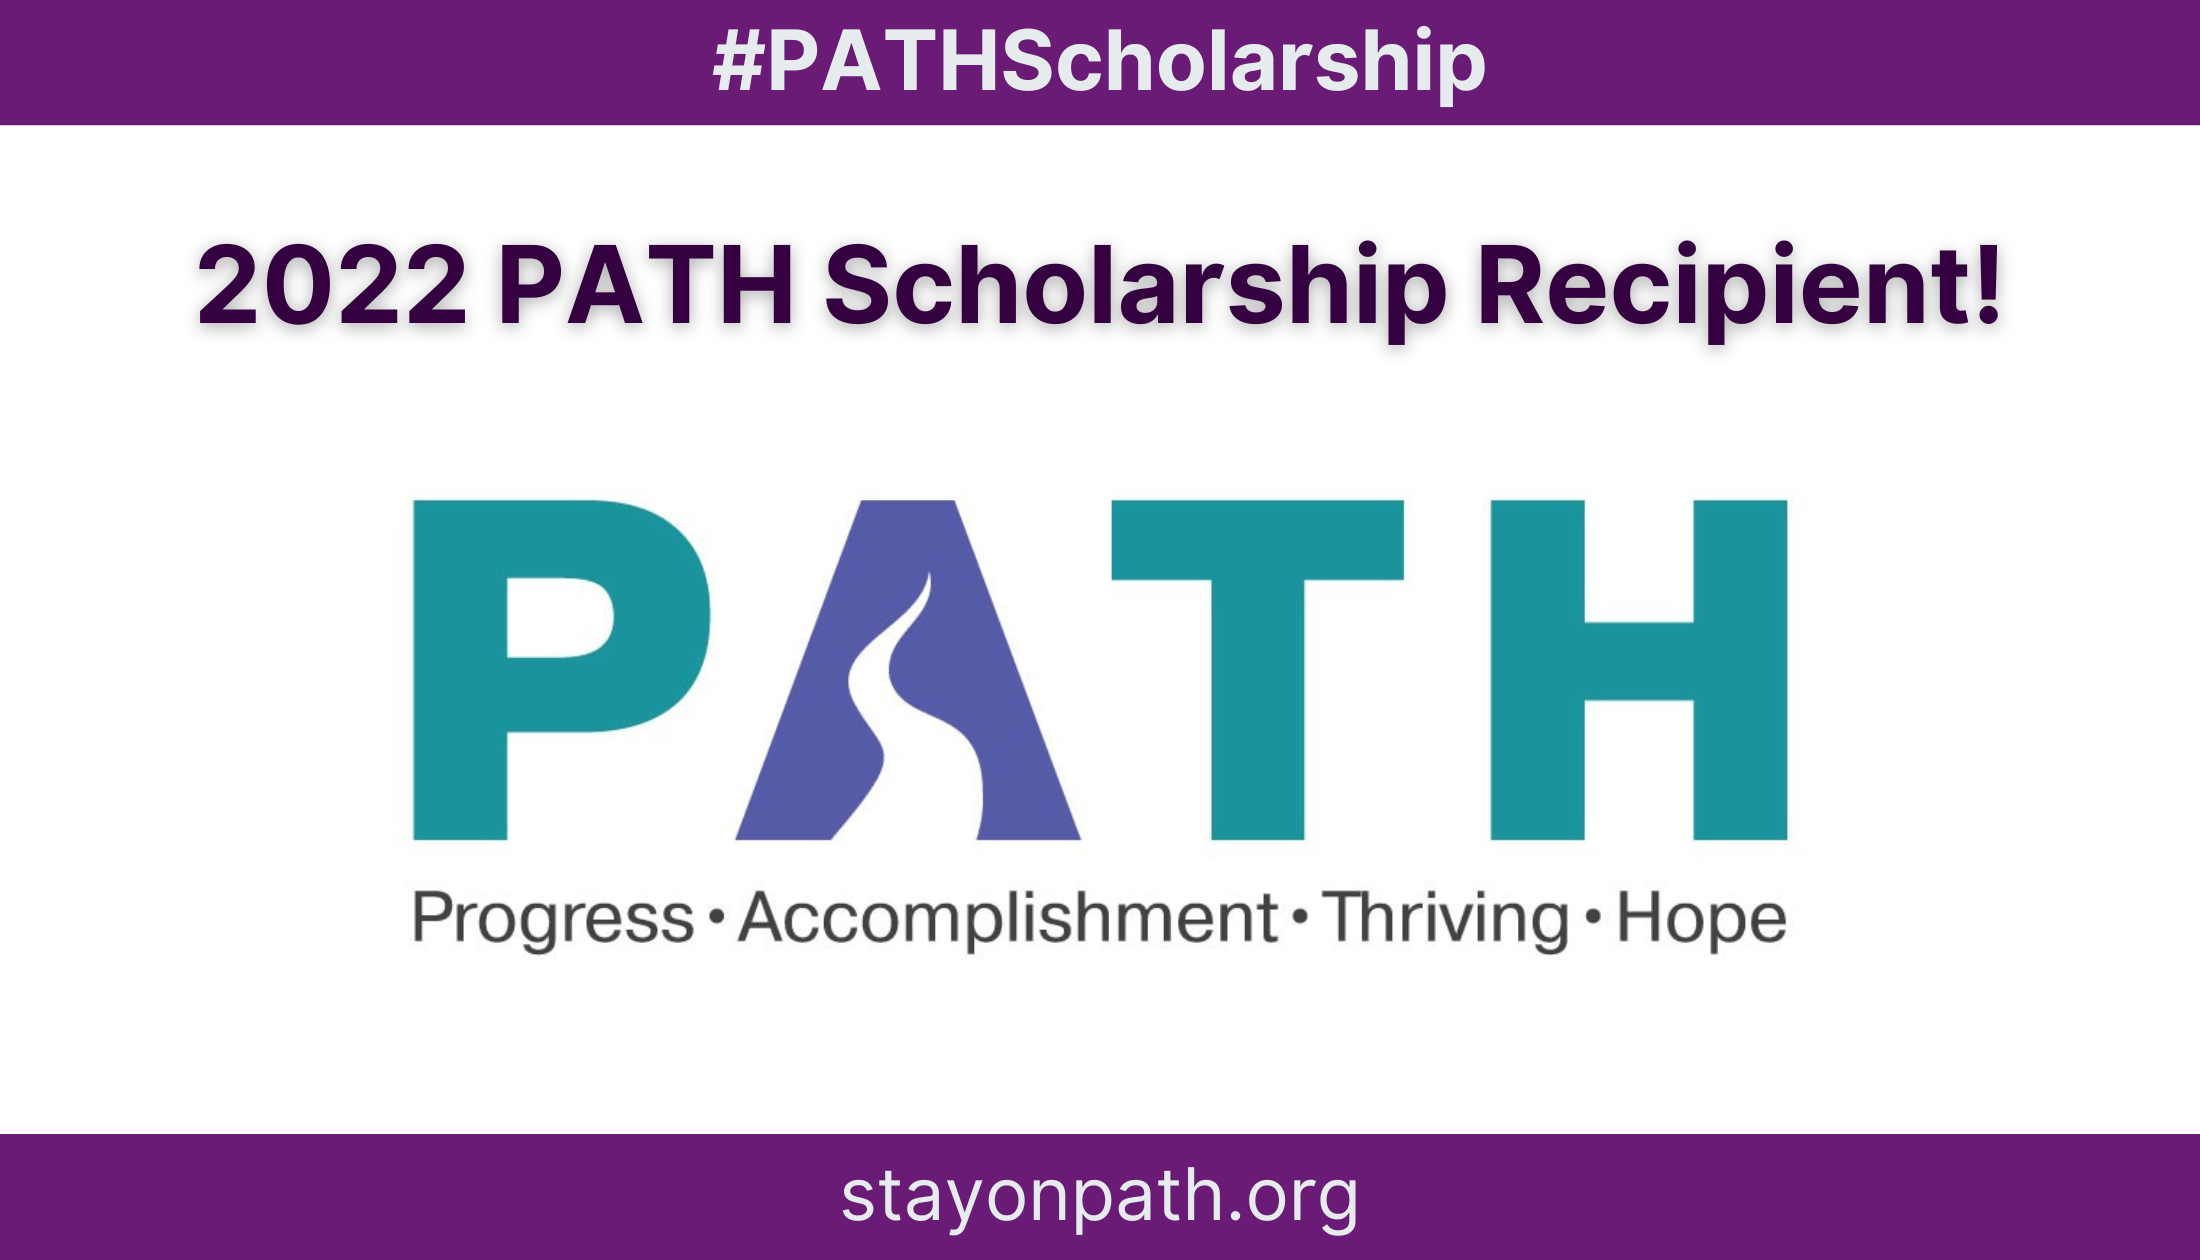 The PATH Scholarship Winner 2022 is CCTC